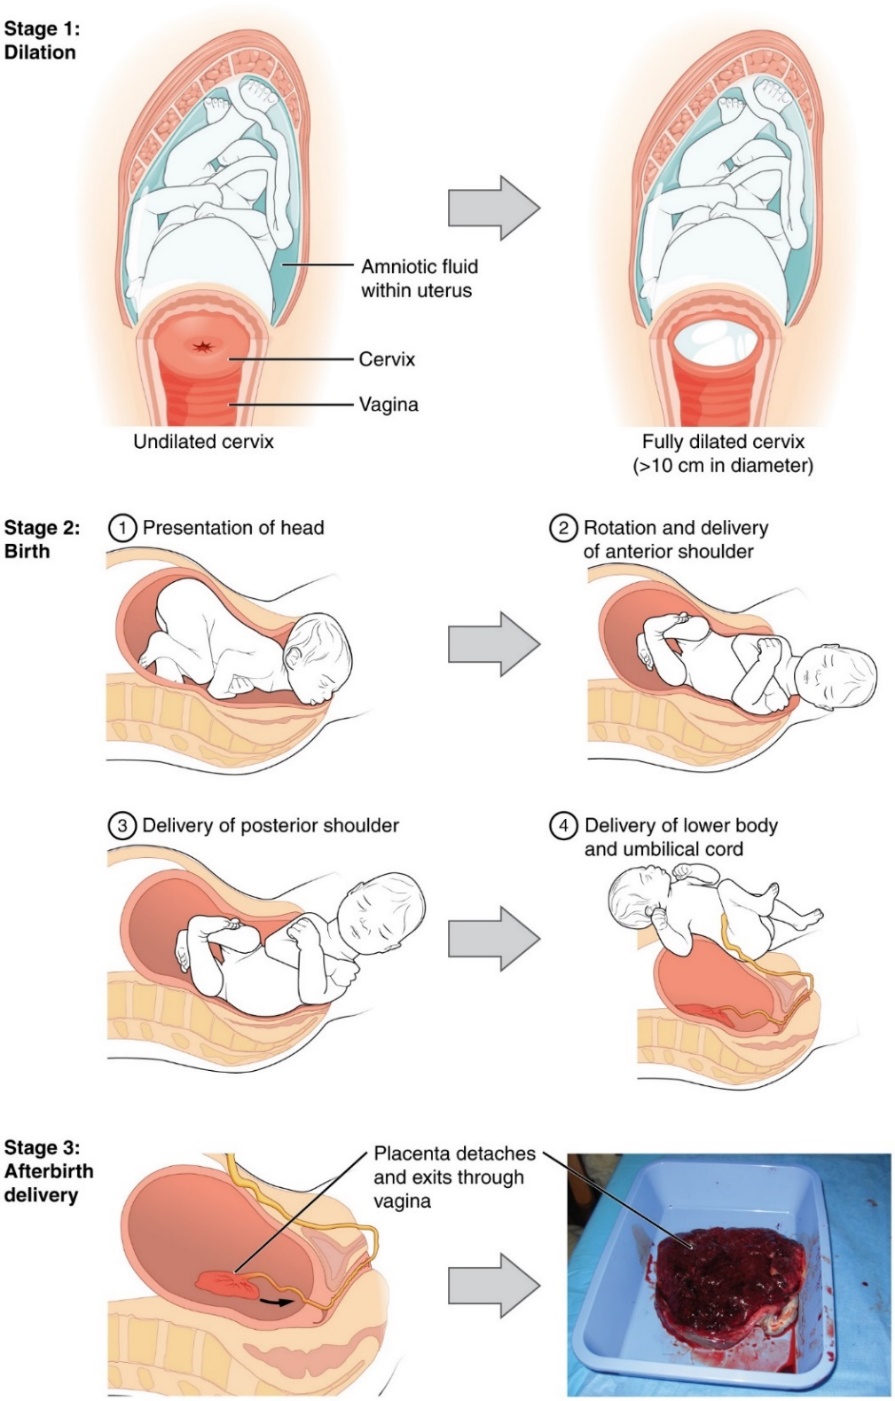 Three stages of childbirth